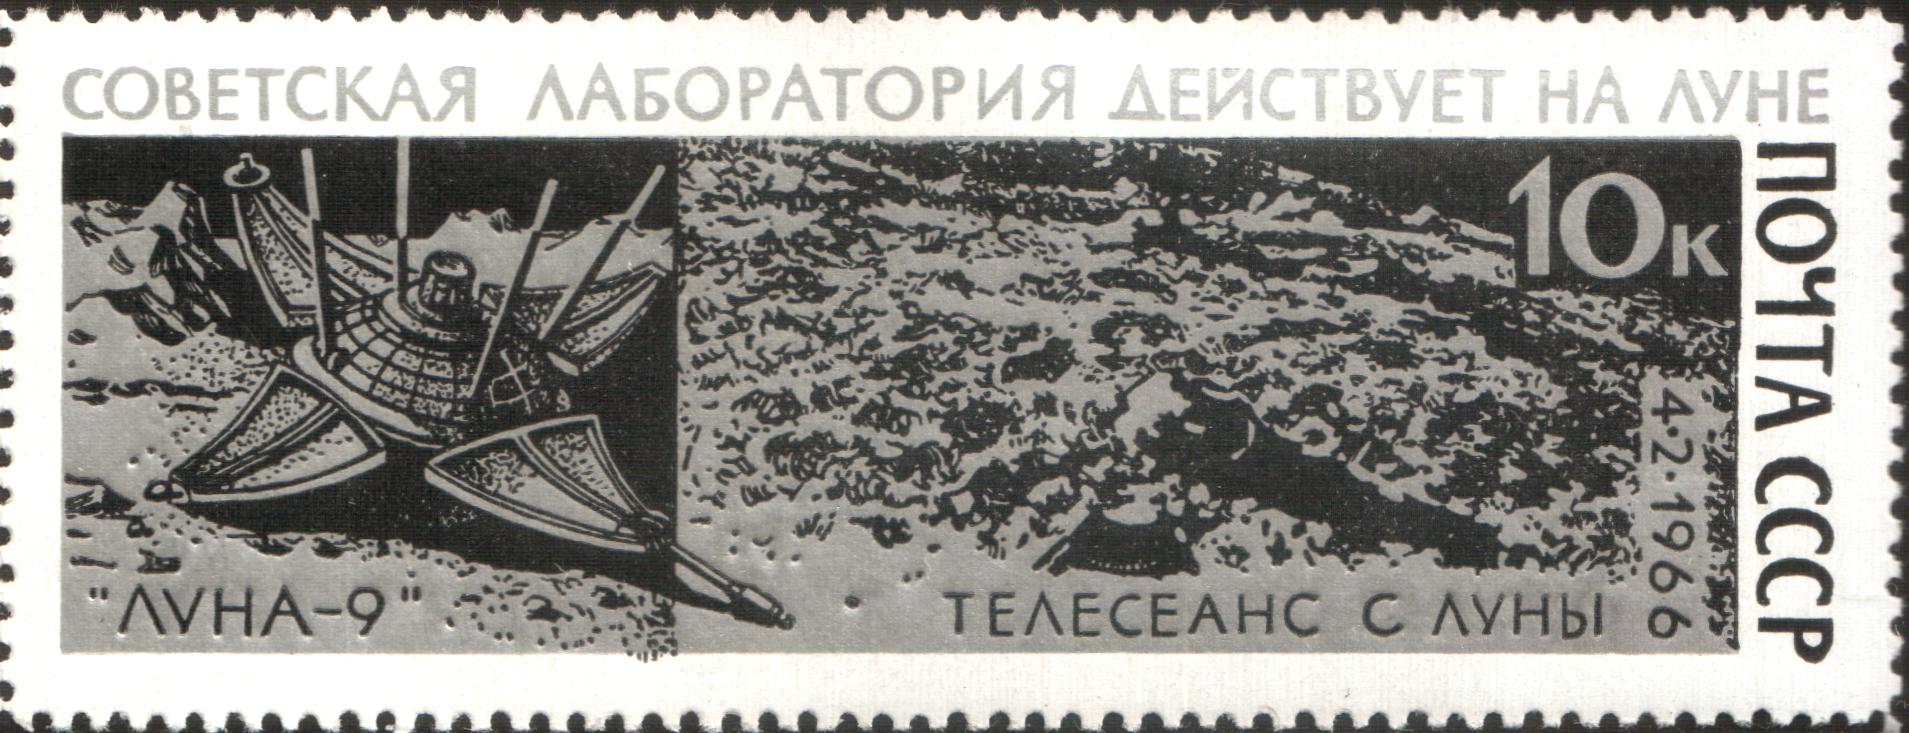 Luna 9 stamp.jpg